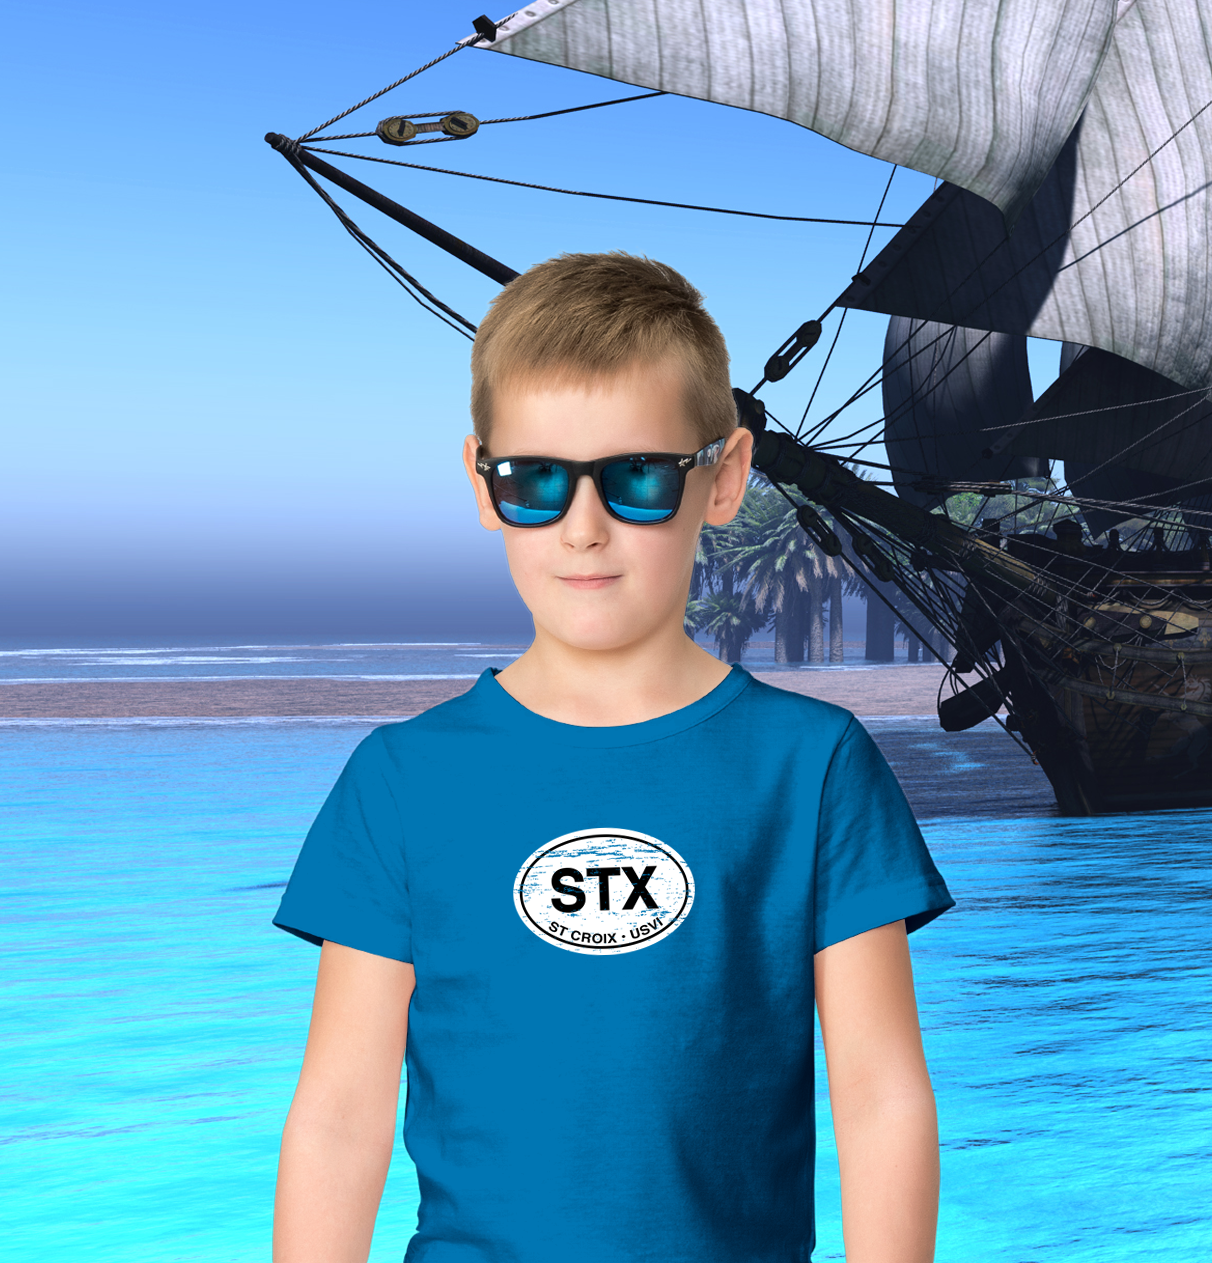 St Croix Classic Youth T-Shirt - My Destination Location